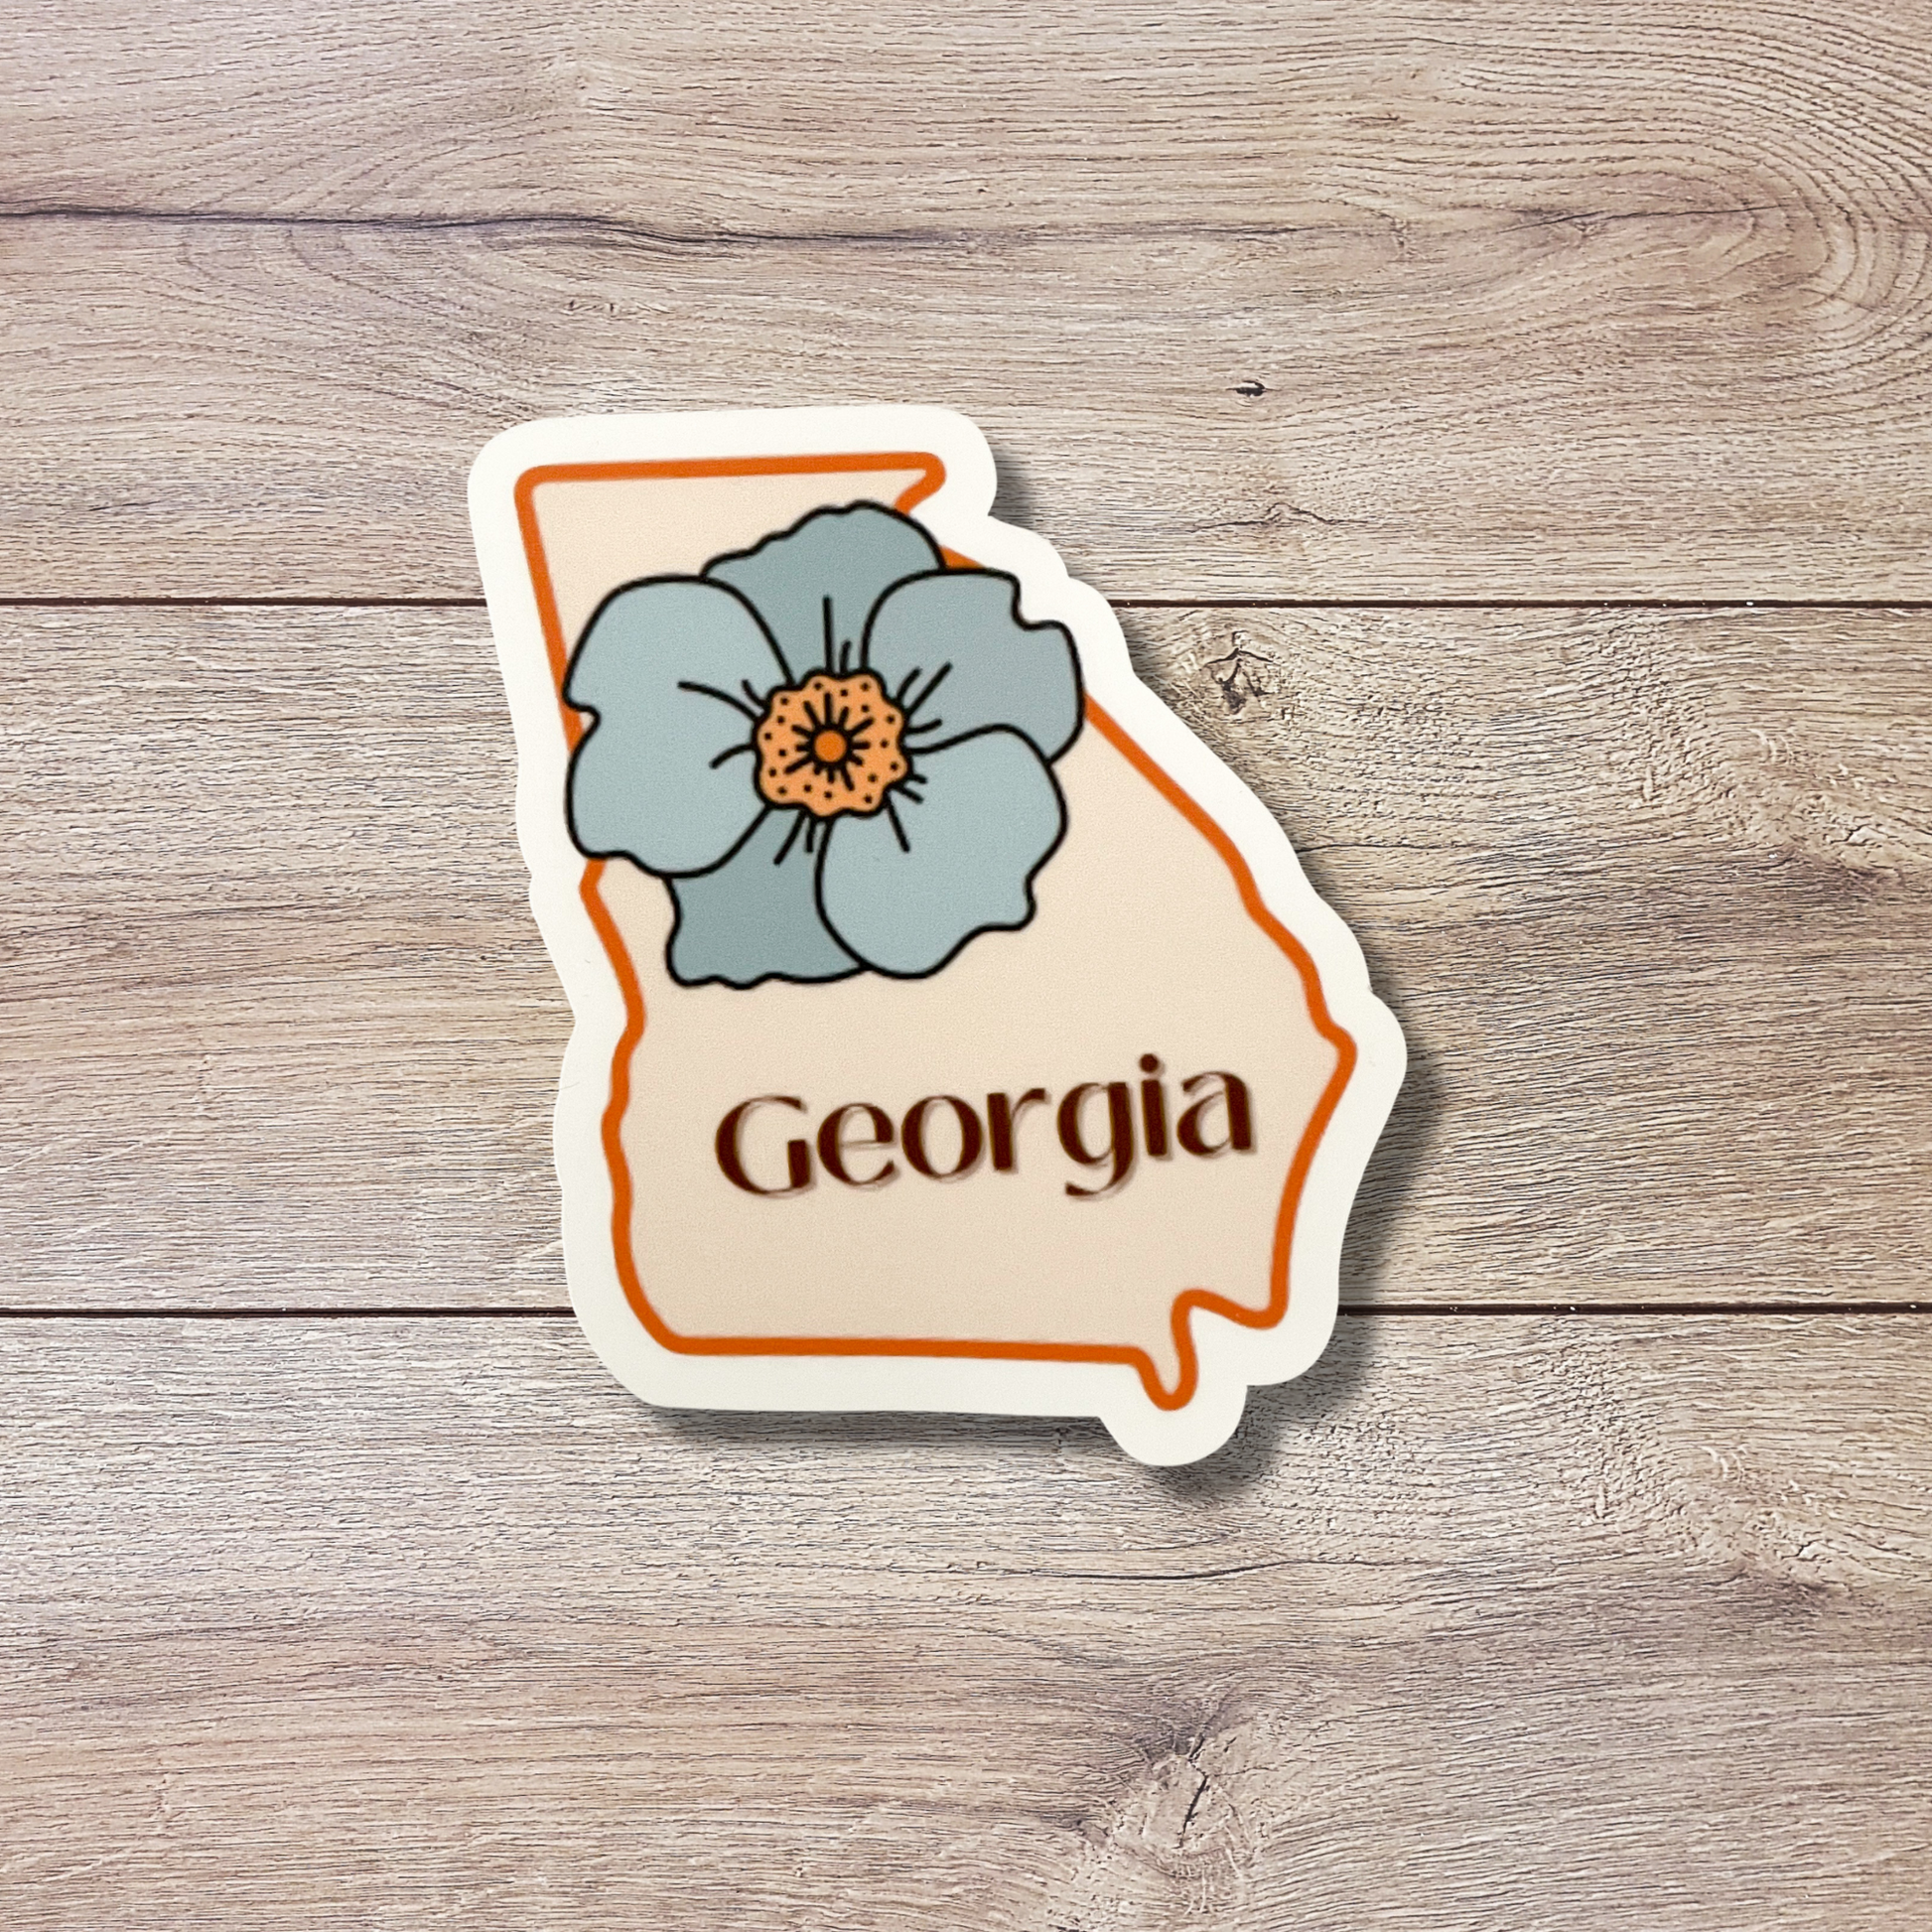 georgia state flower